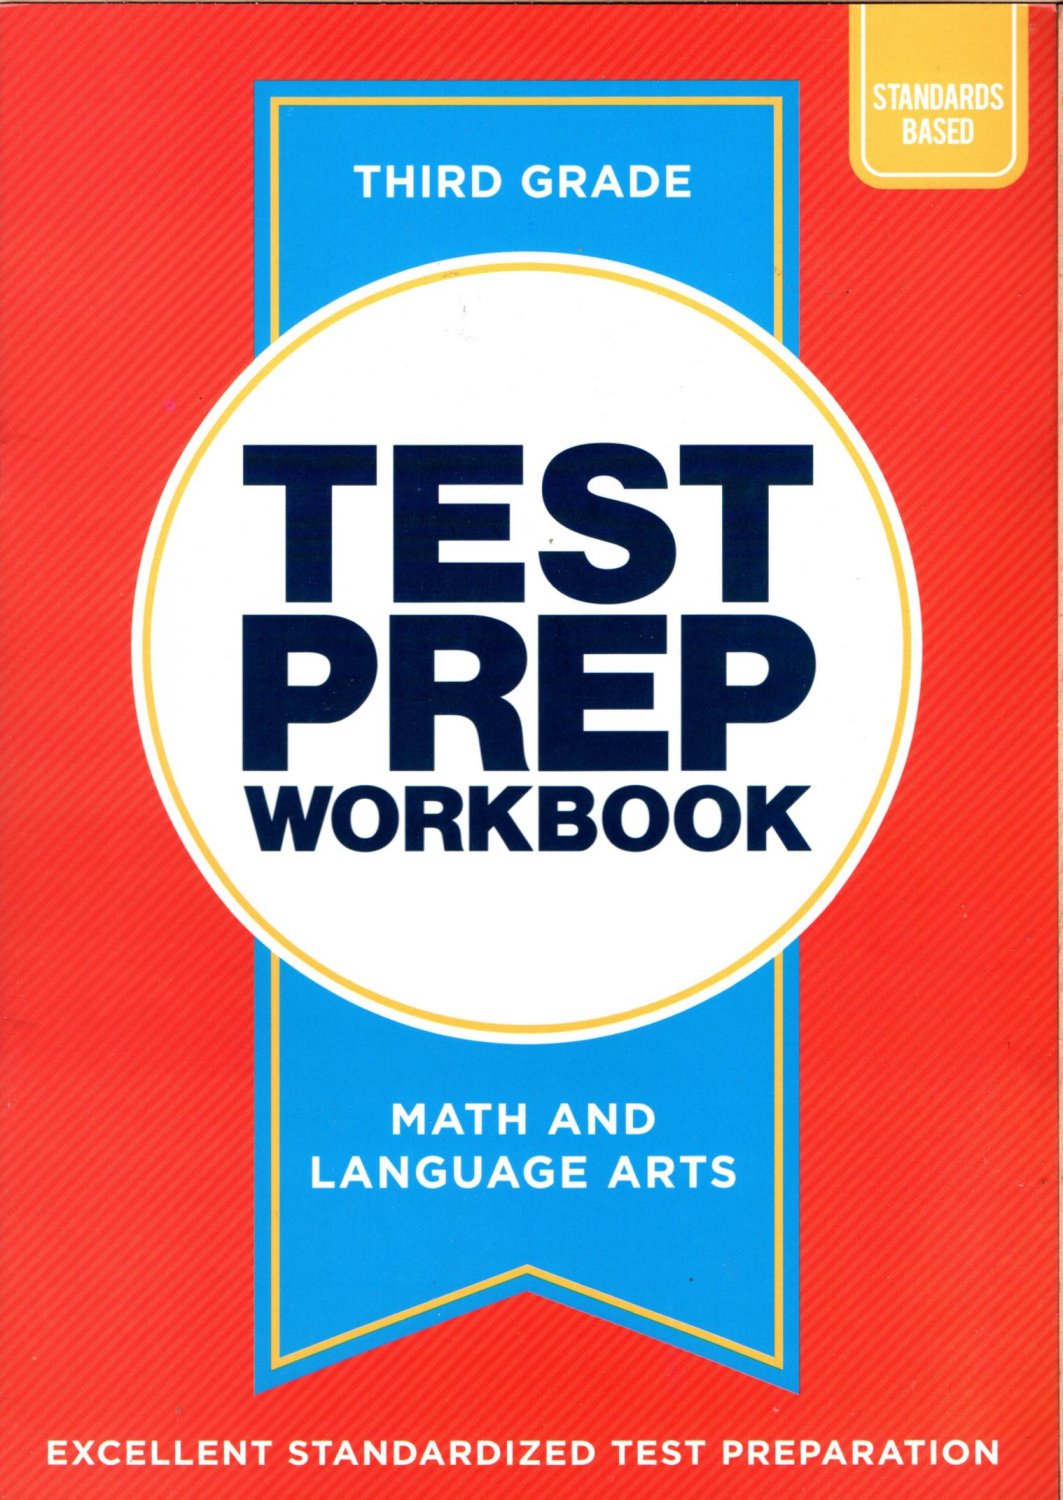 Third Grade Math & Language Arts Standards Based Excellent Standardized Test Preparation Workbook